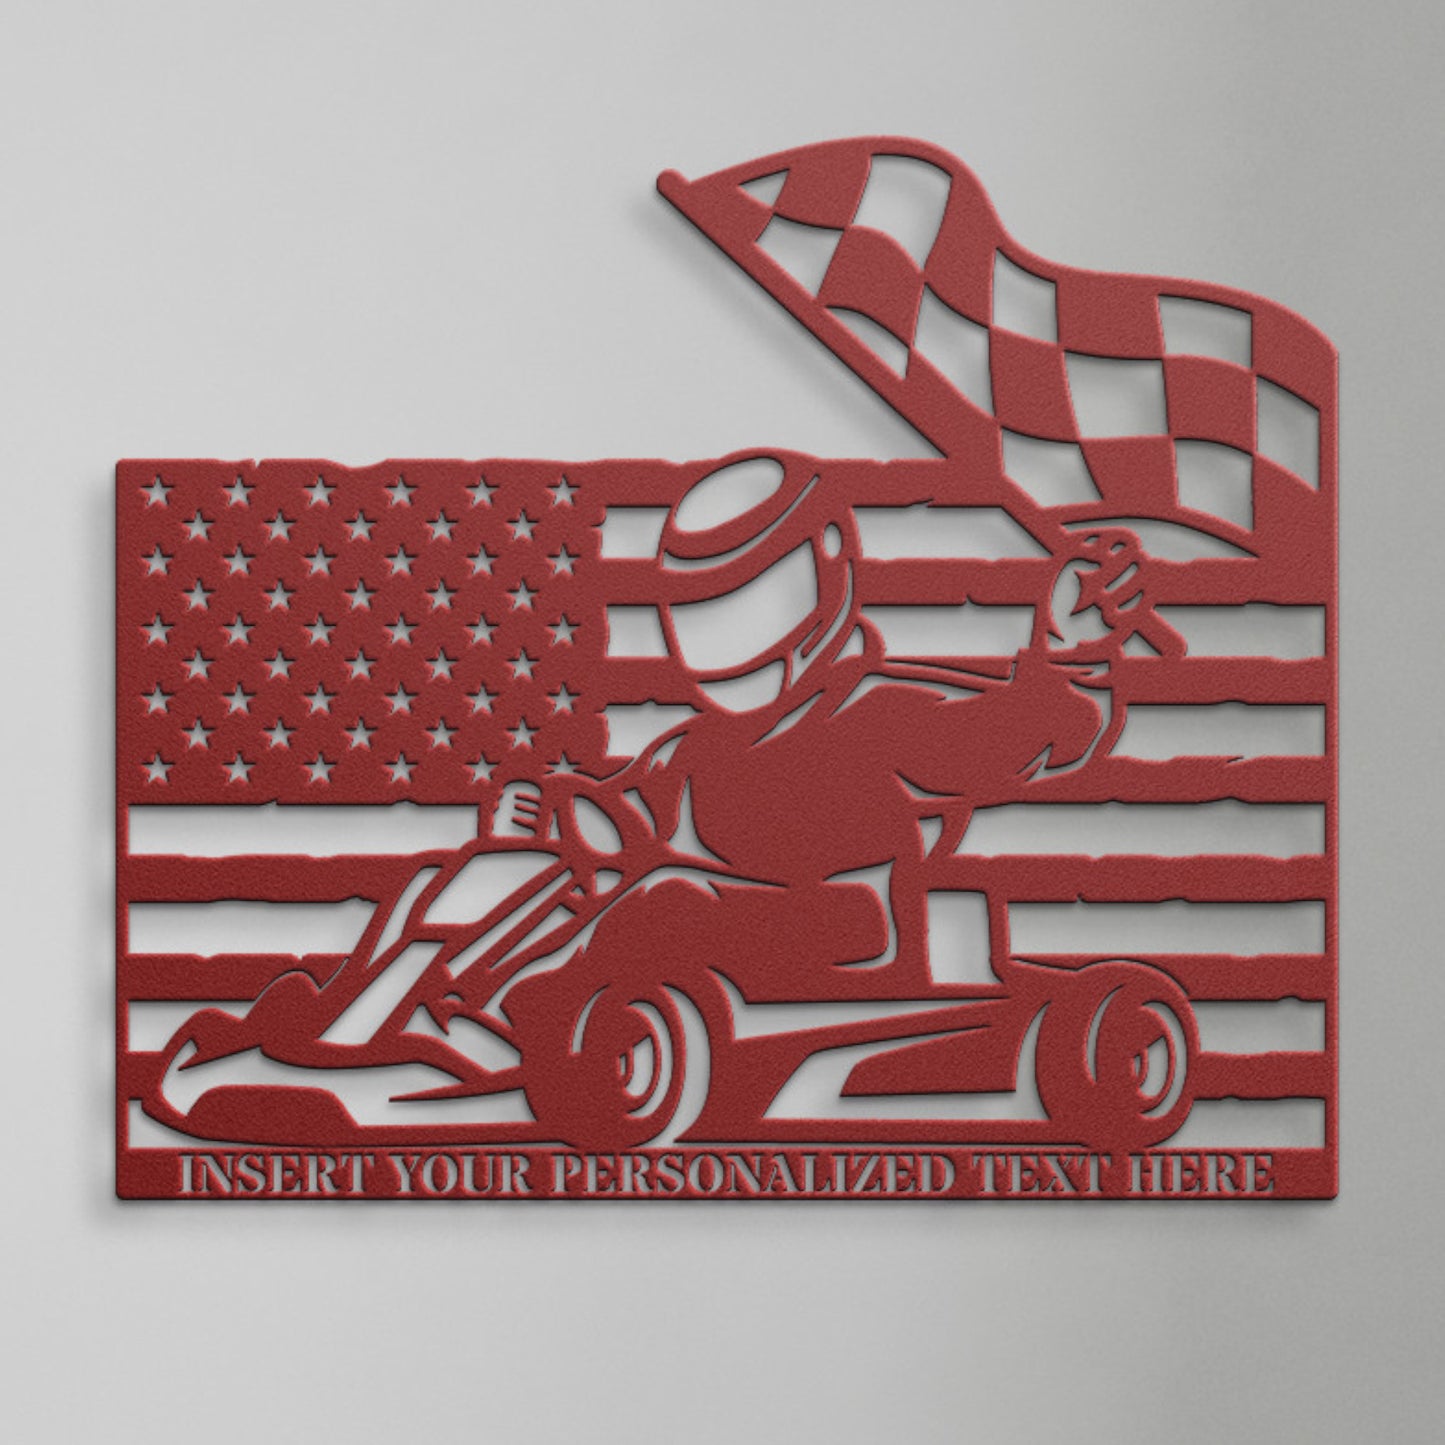 Personalized Karting Name Metal Sign. Custom Go-Kart Wall Decor Gift. Racing Driver. Petrolhead. Racetrack Wall Hanging. Champion. Winner